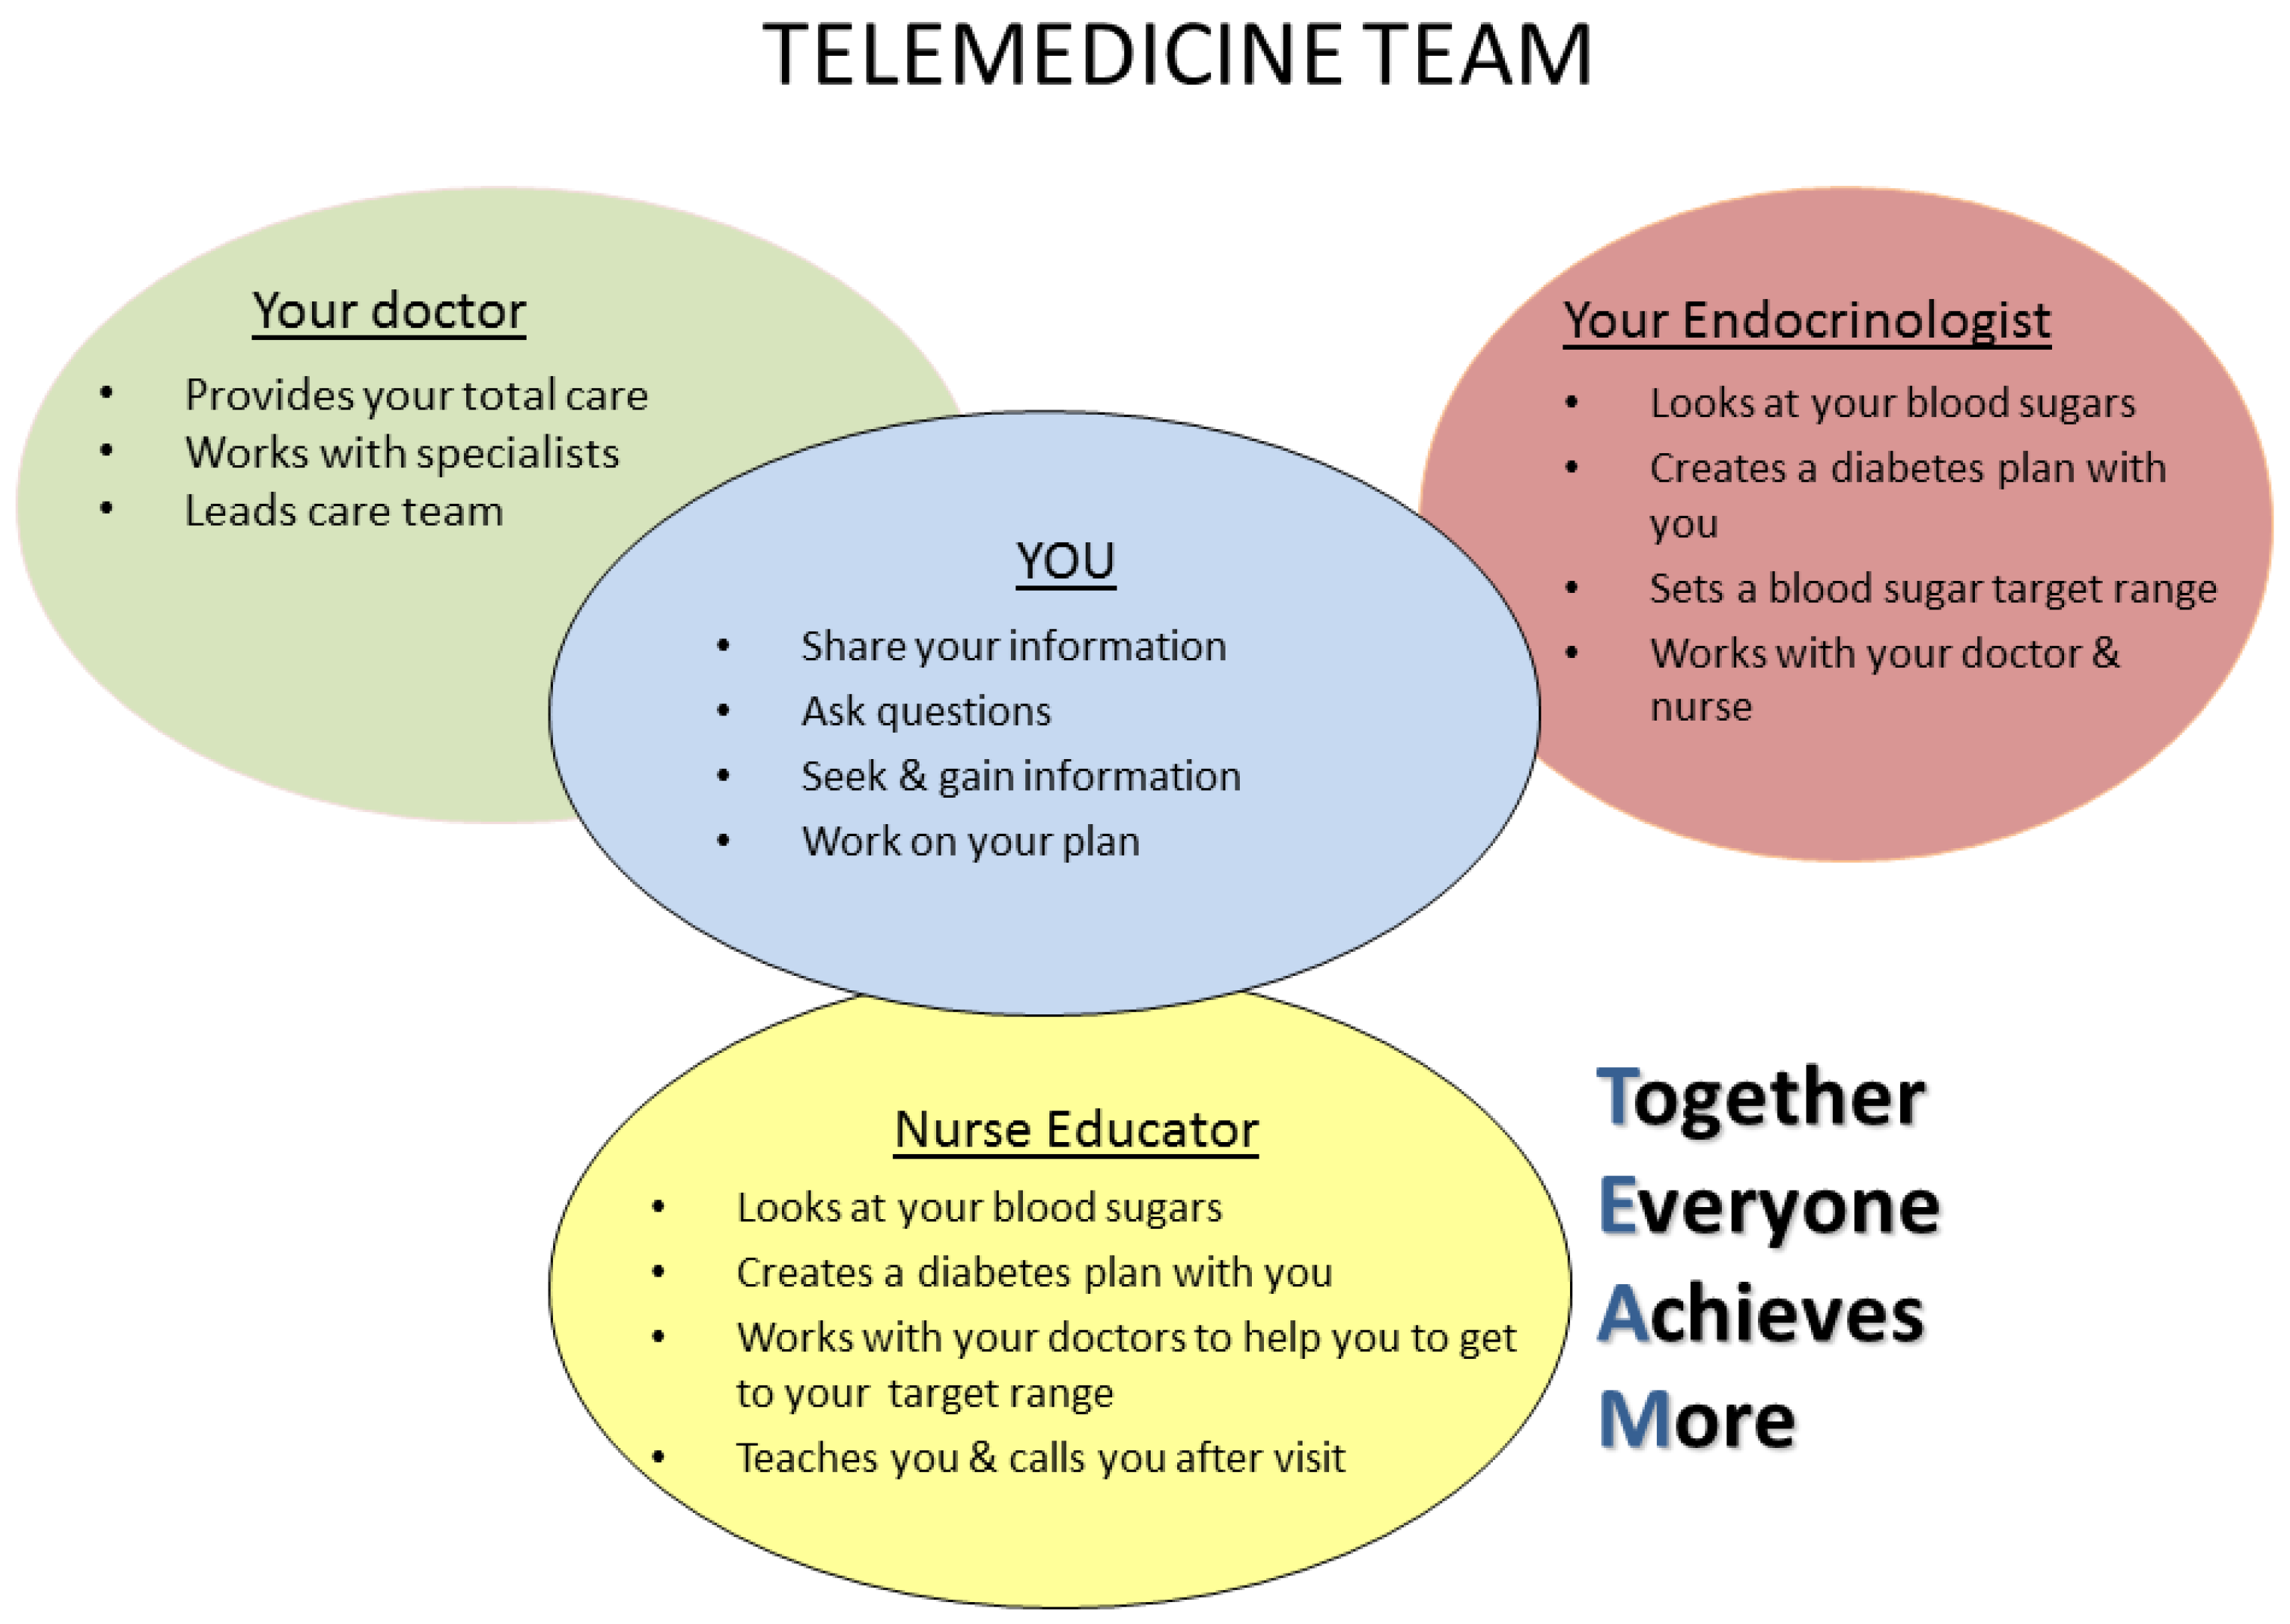 Diabetes and telemedicine